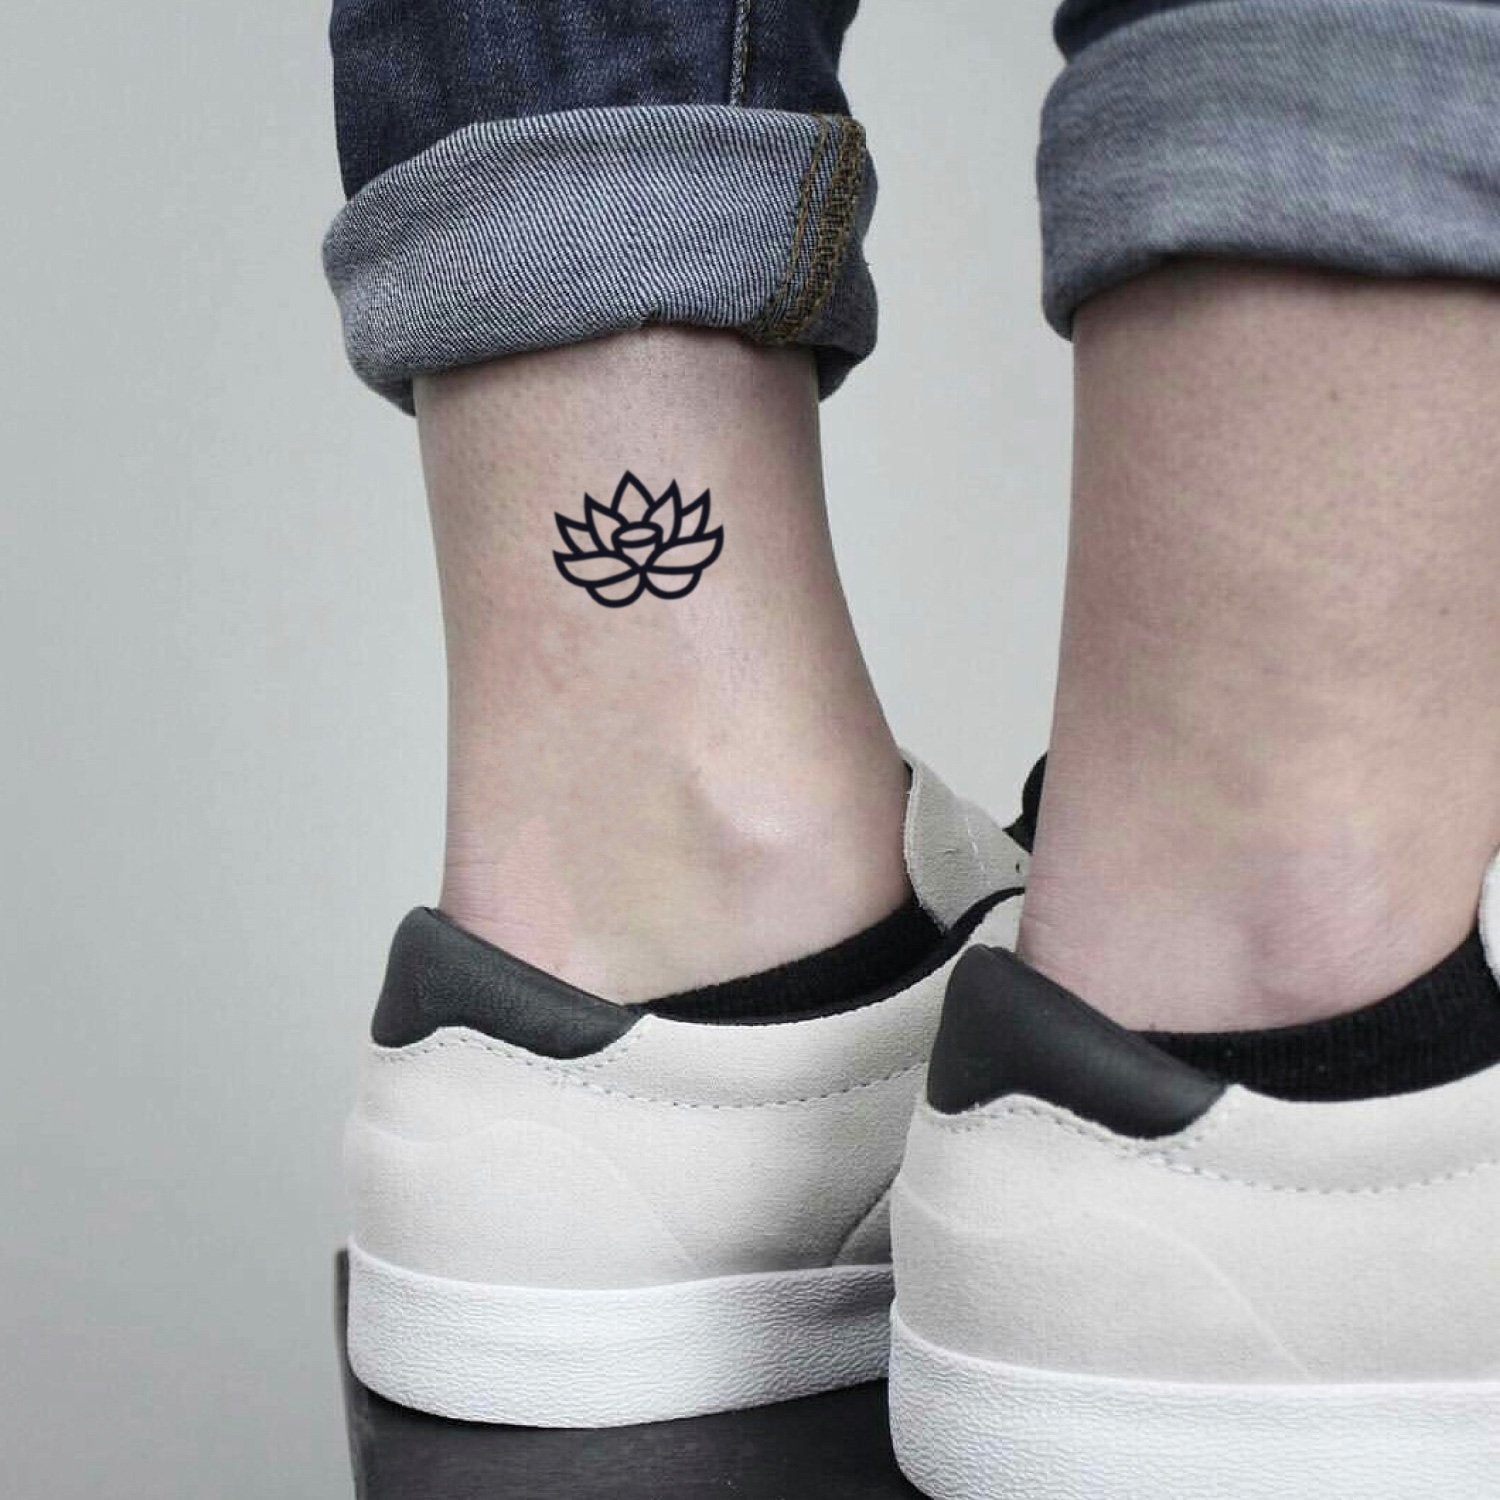 fake small tiny no mud no lotus yoga petite bohemian temporary tattoo sticker design idea on foot ankle symbolic tattoos for women